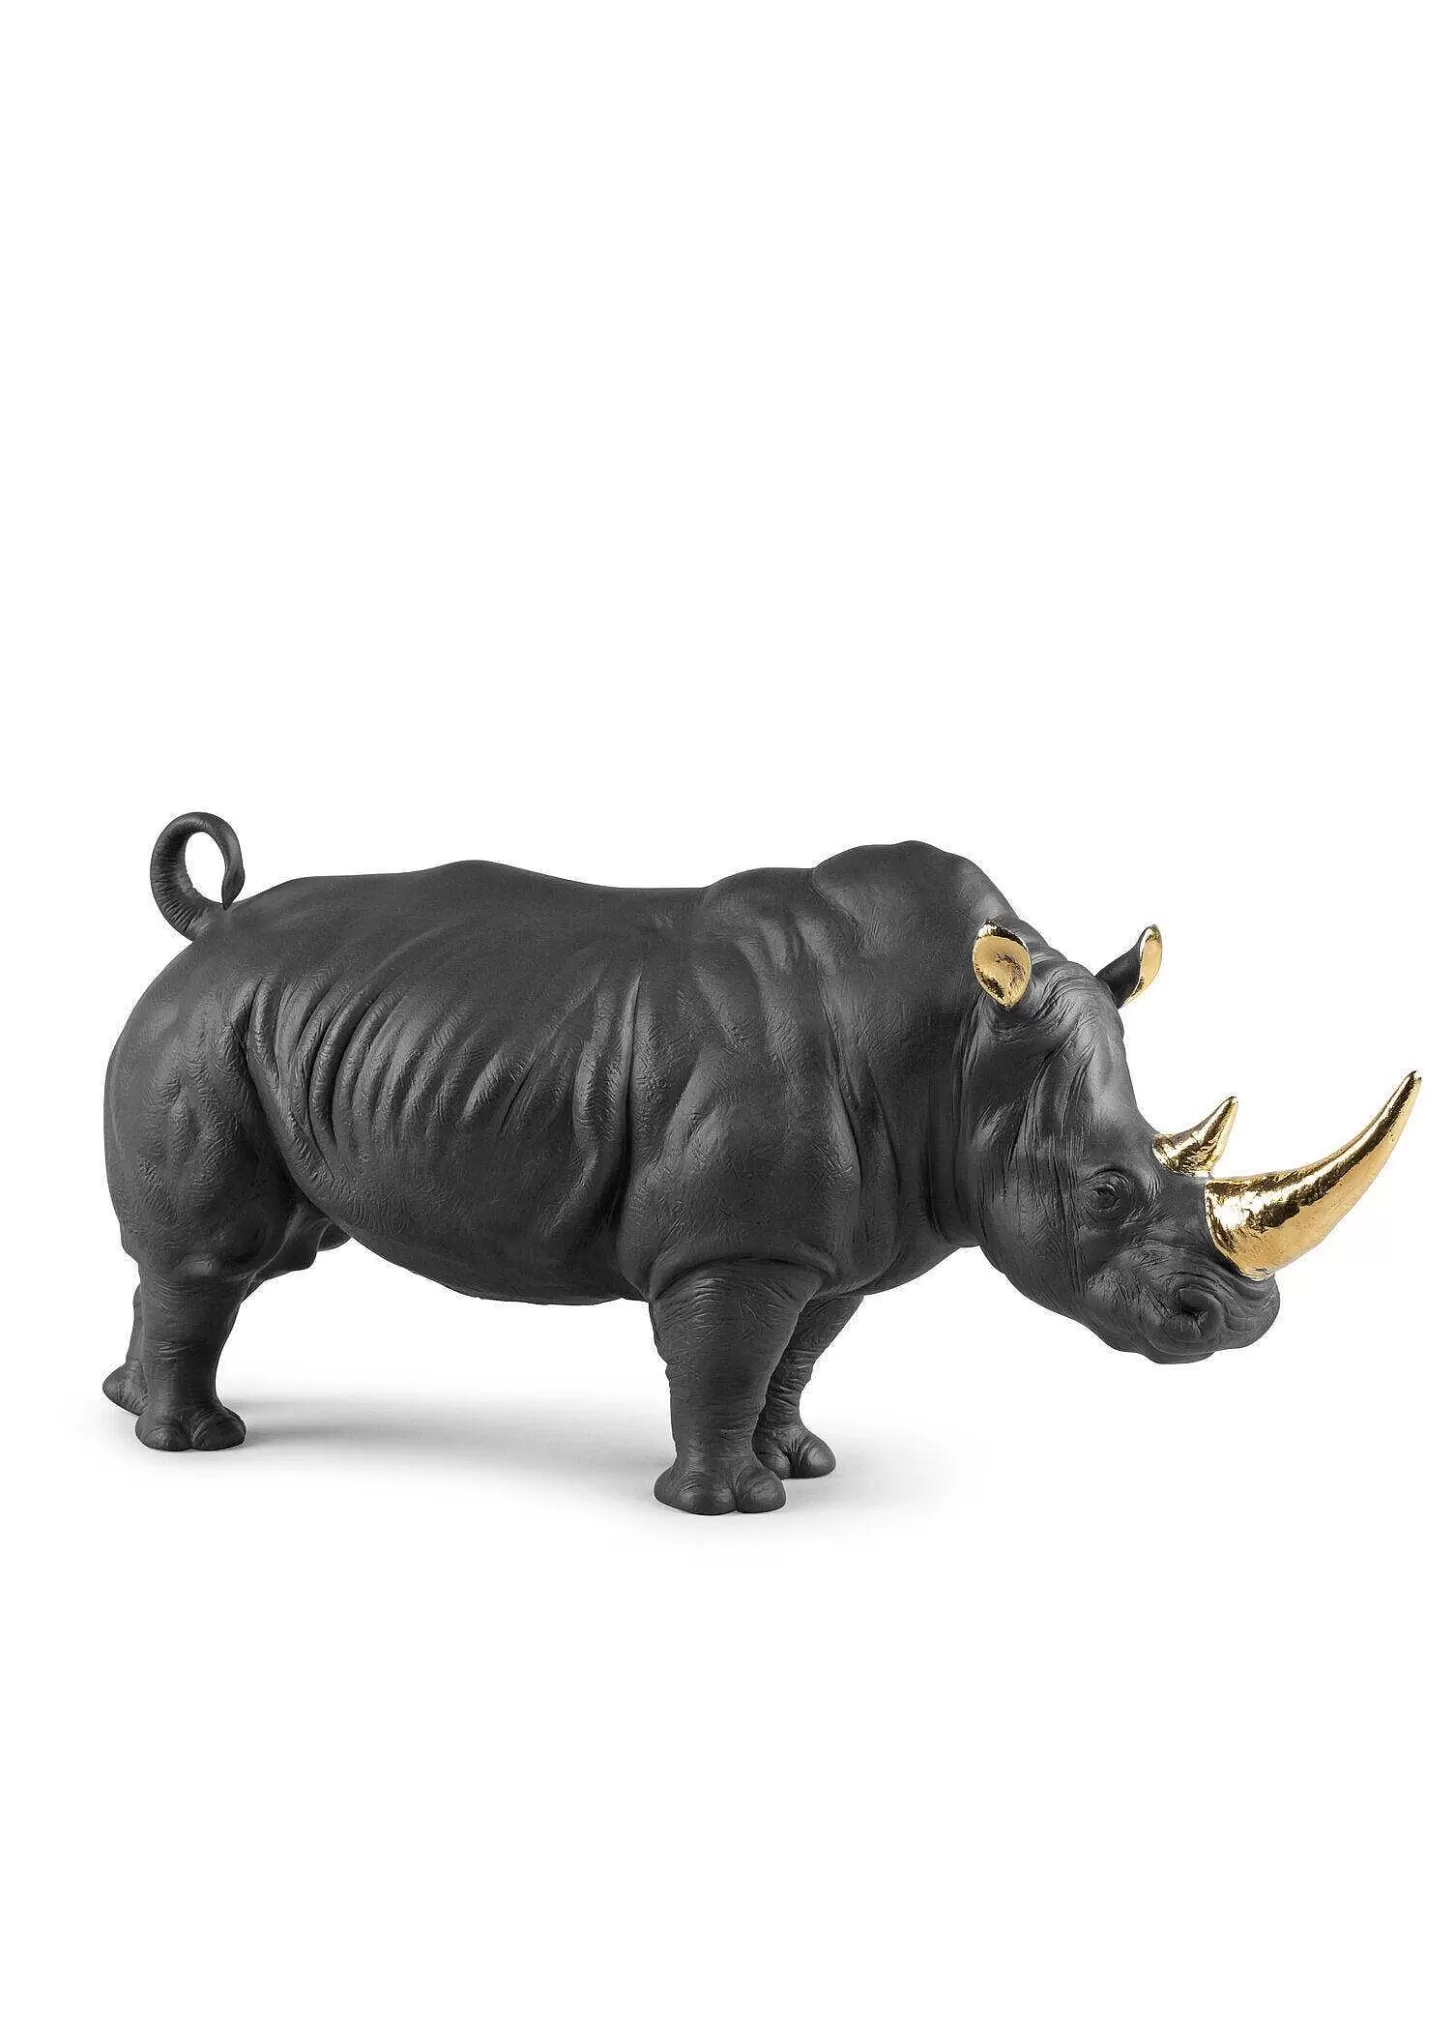 Lladró Rhino (Black-Gold) Sculpture. Limited Edition^ Design